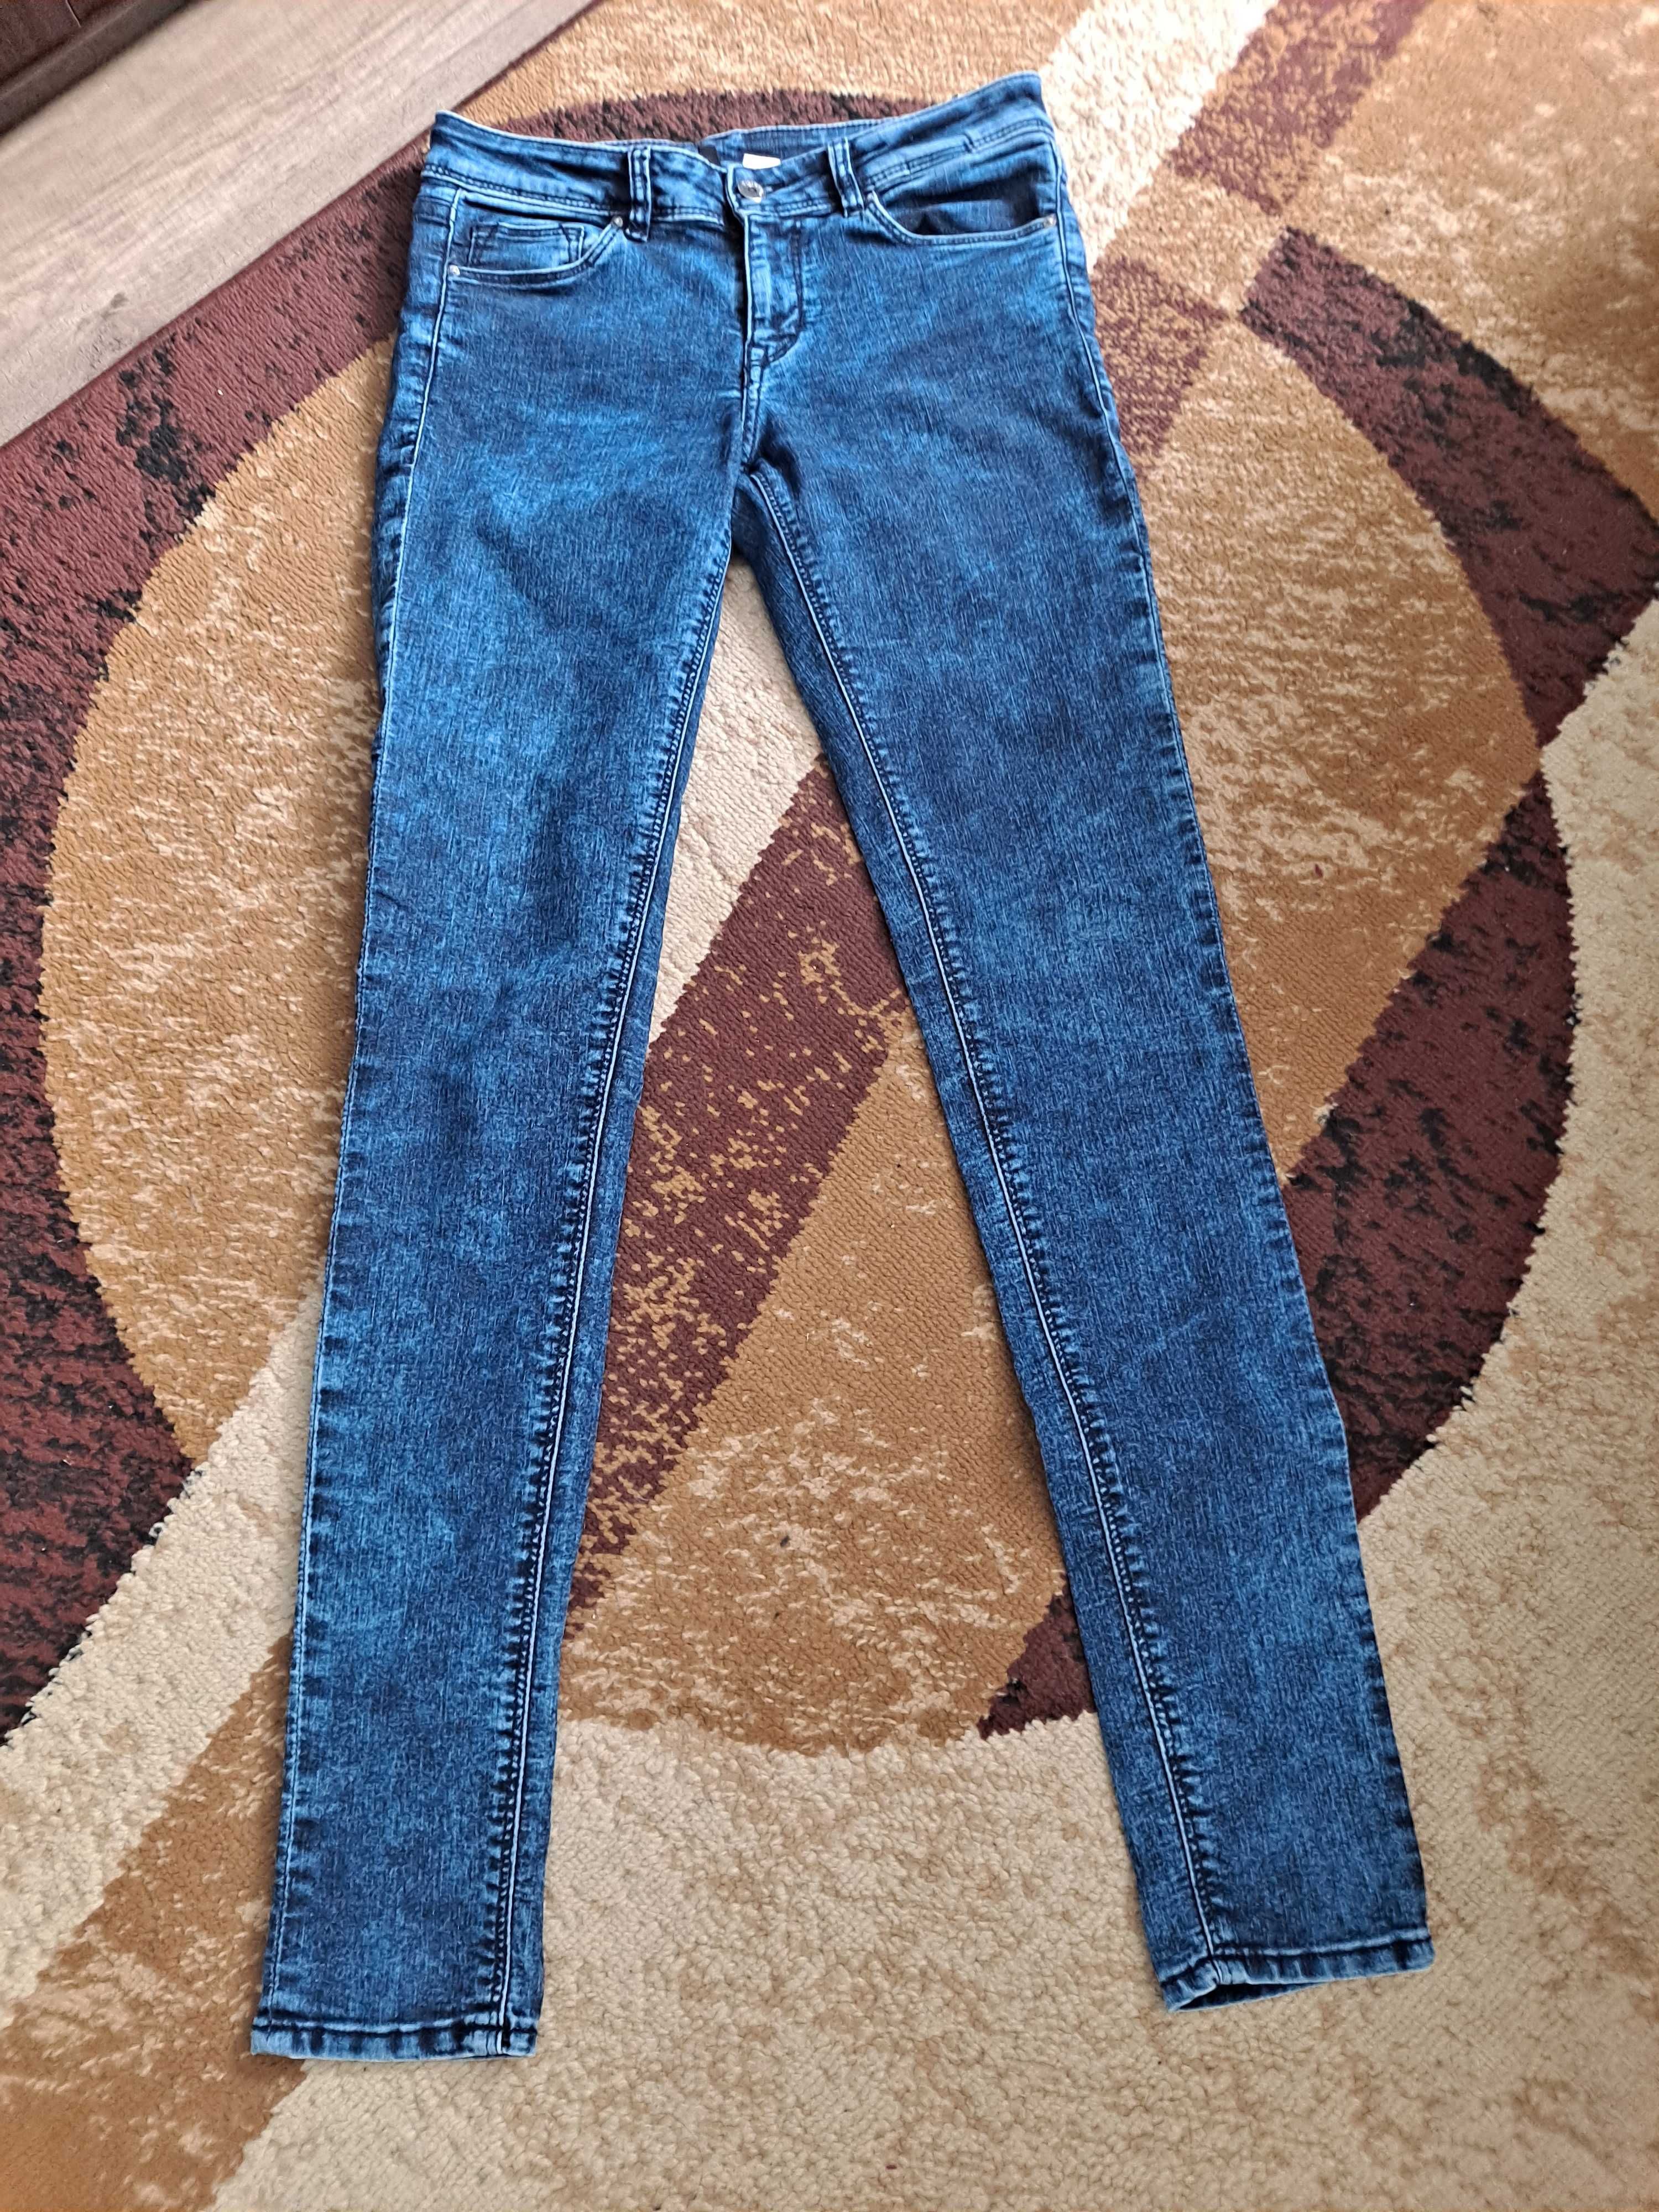 Jeans damskie 38, super stan,  tanio